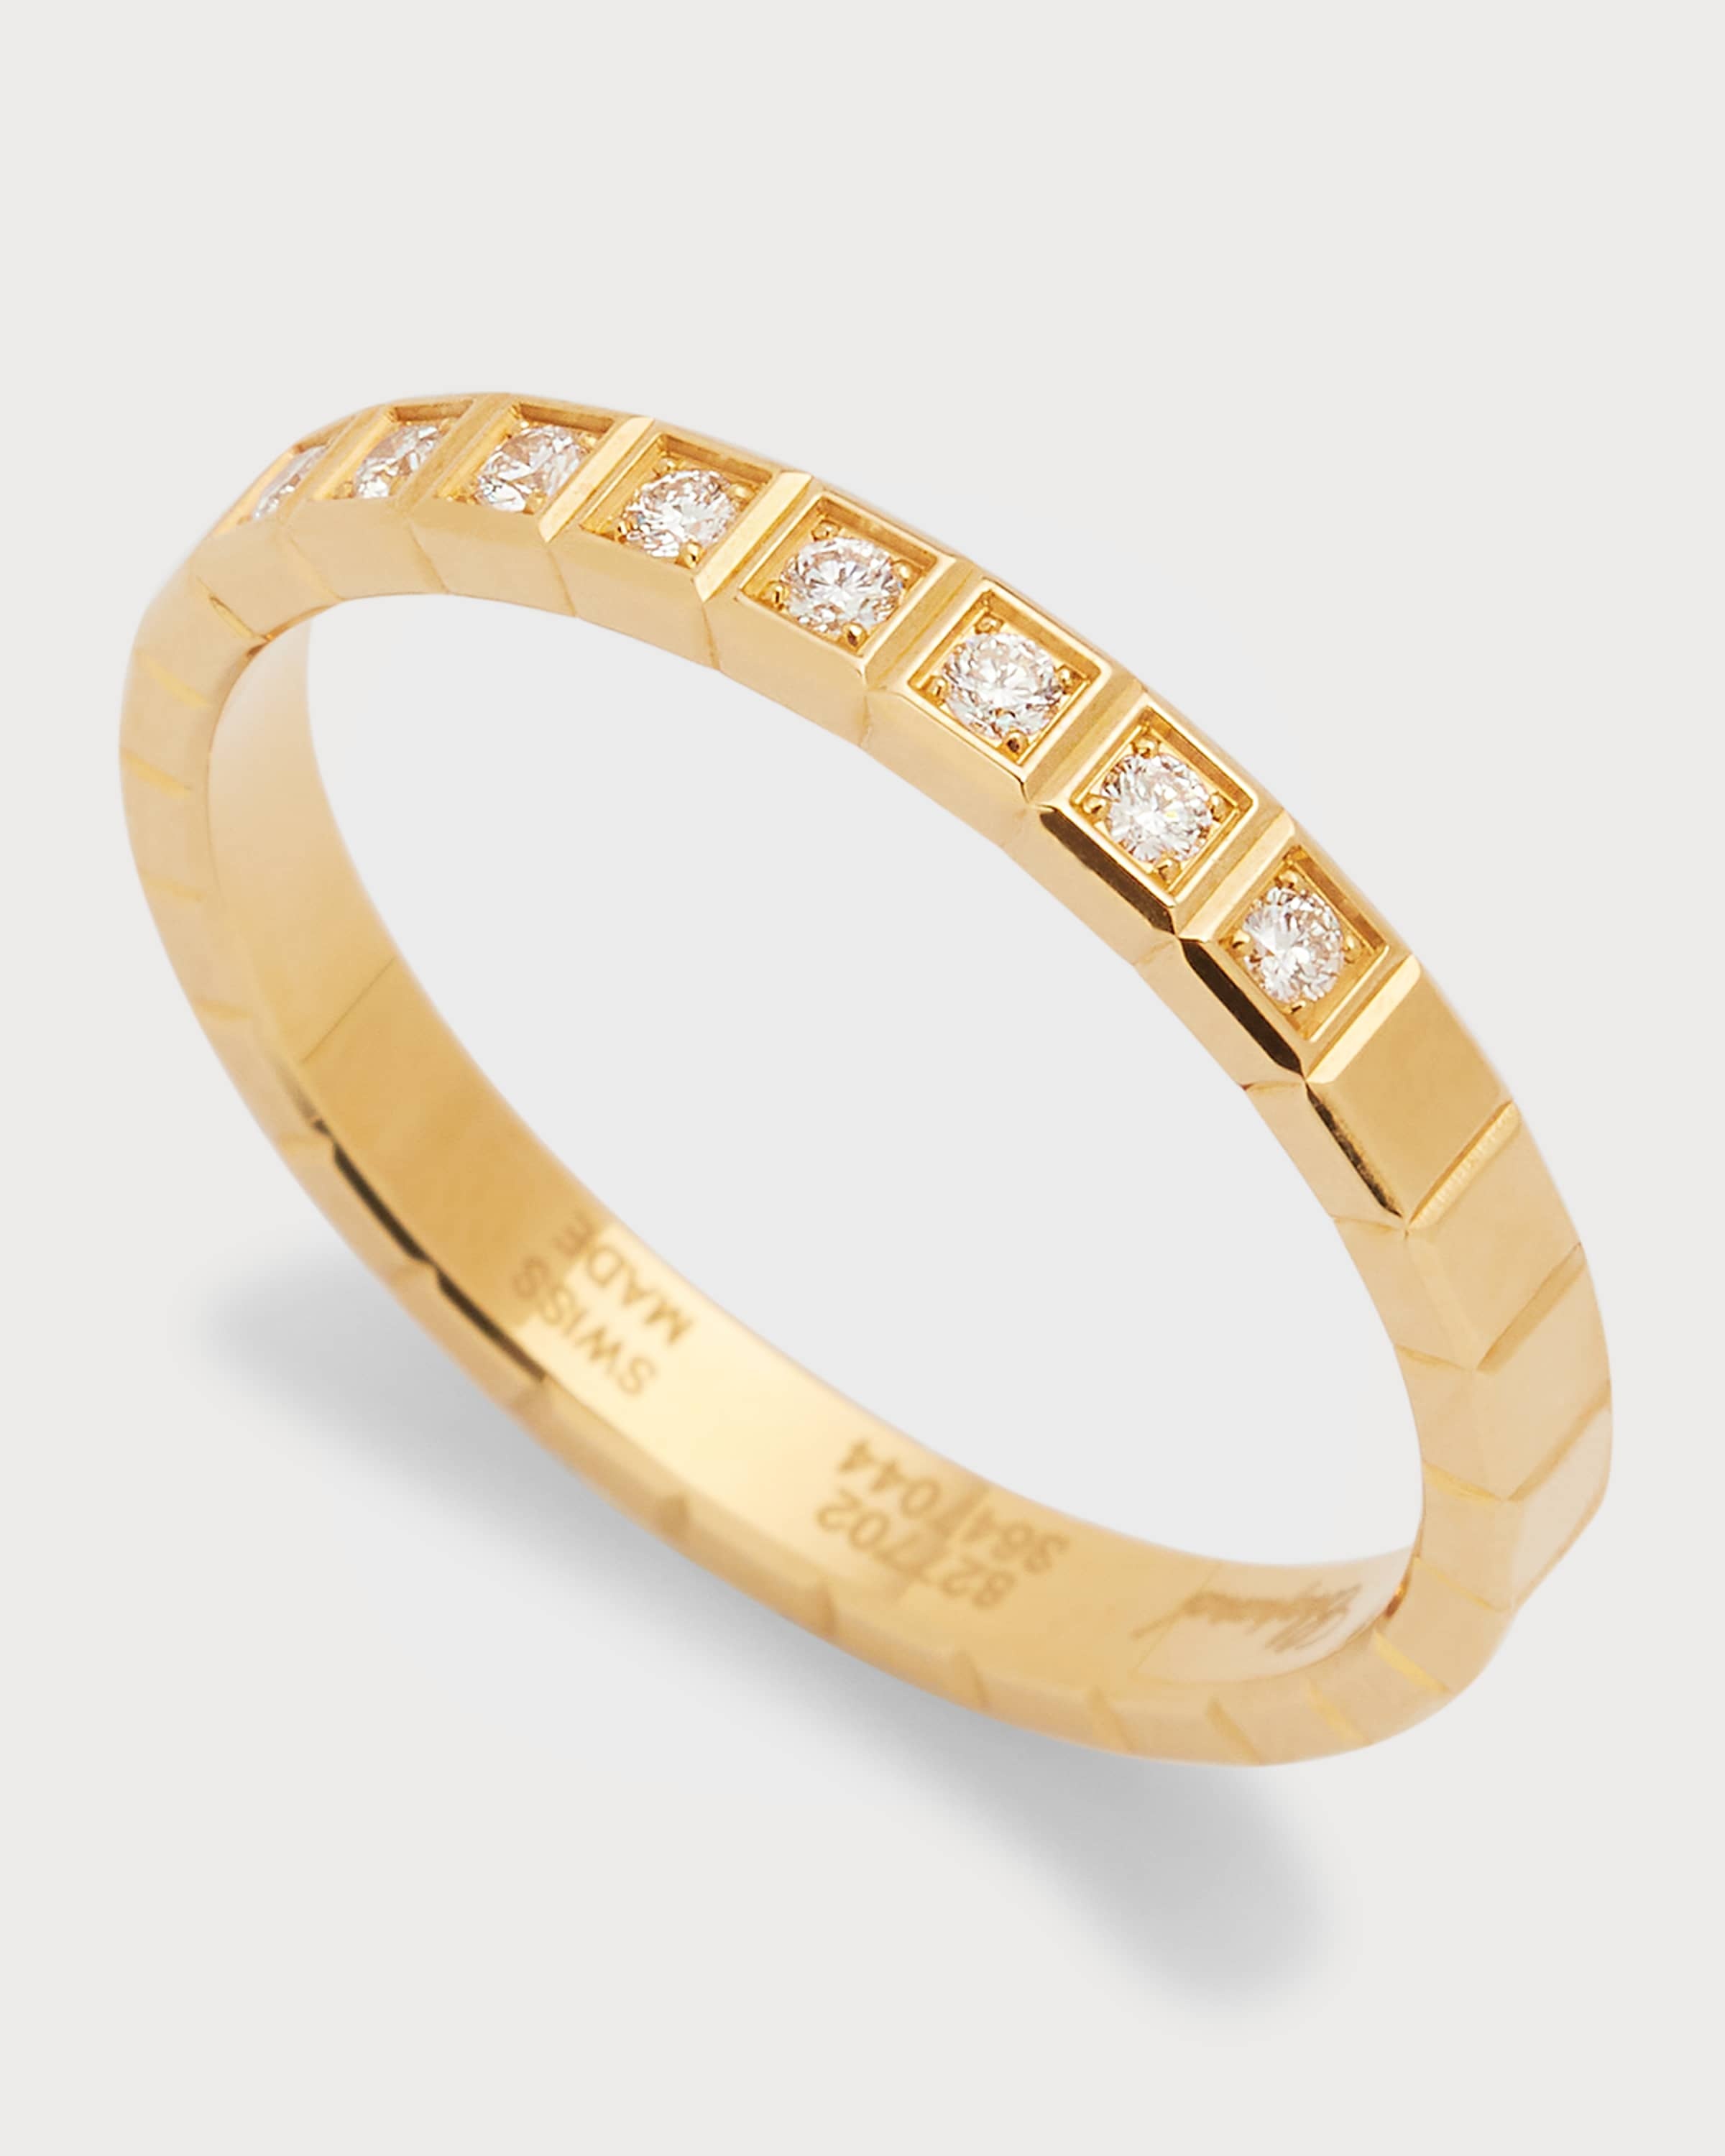 Ice Cube Mini Diamond Ring in 18K Yellow Gold, Size 53 - 4